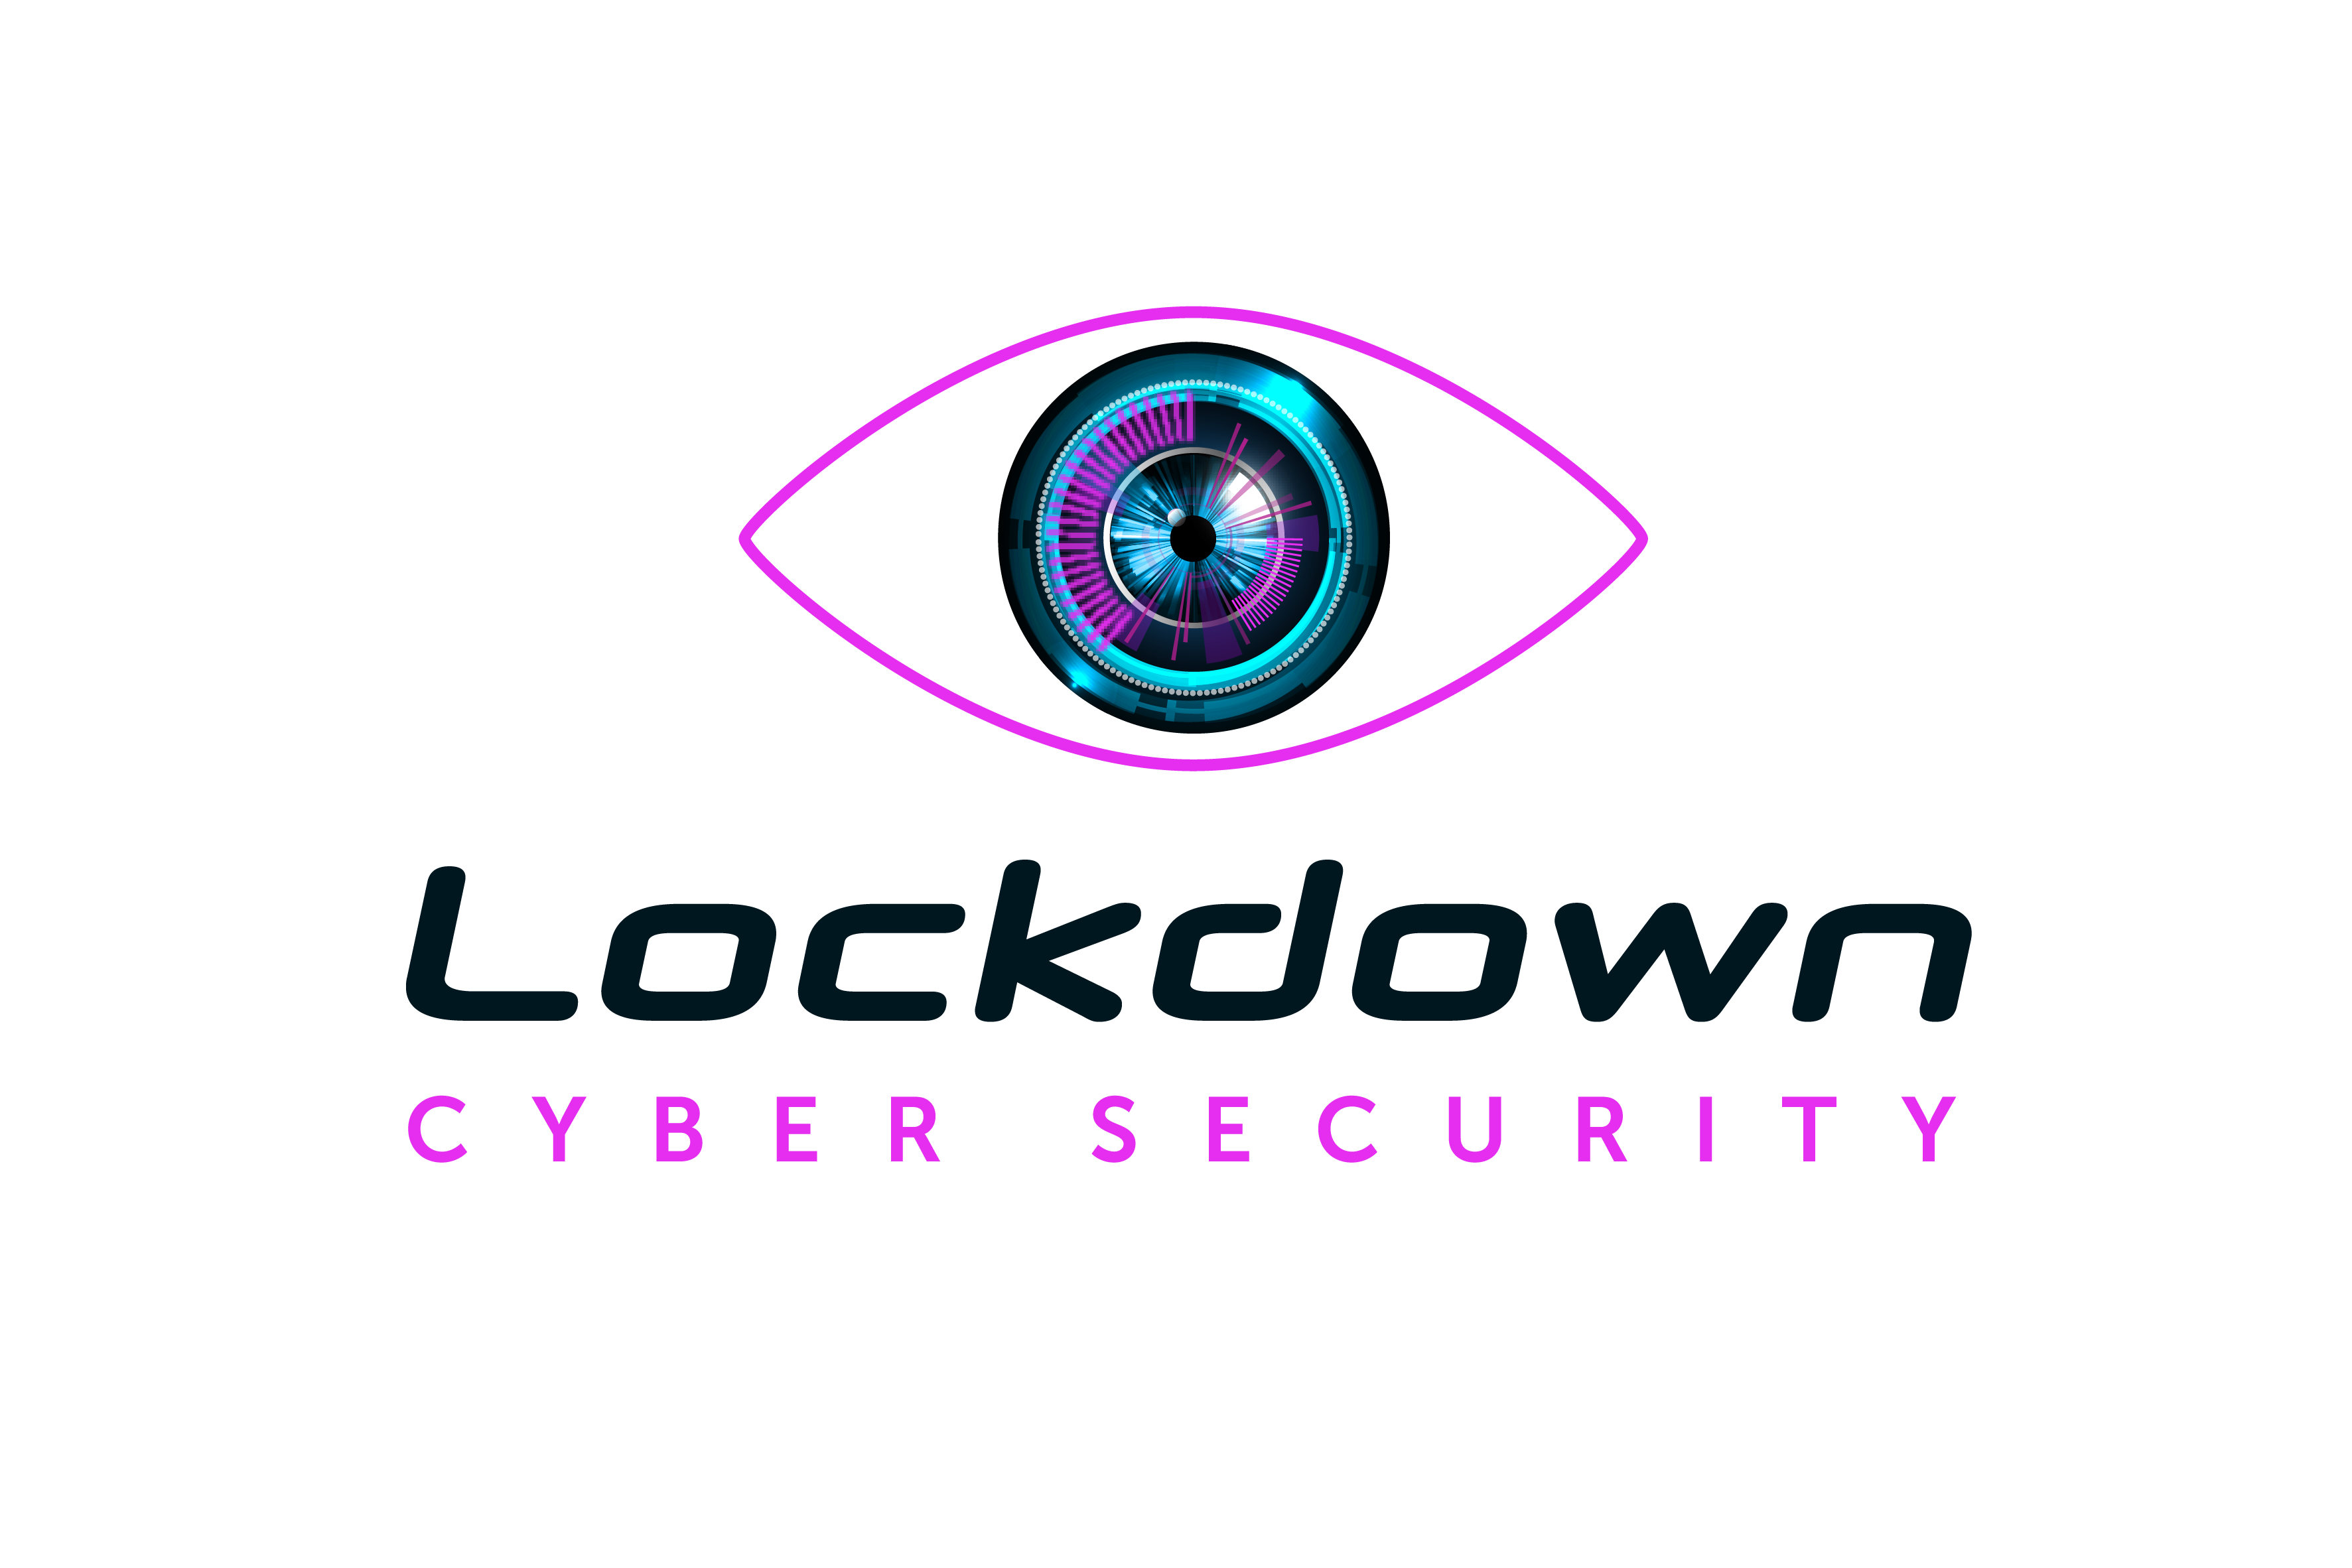 Lockdown Cyber Security logo